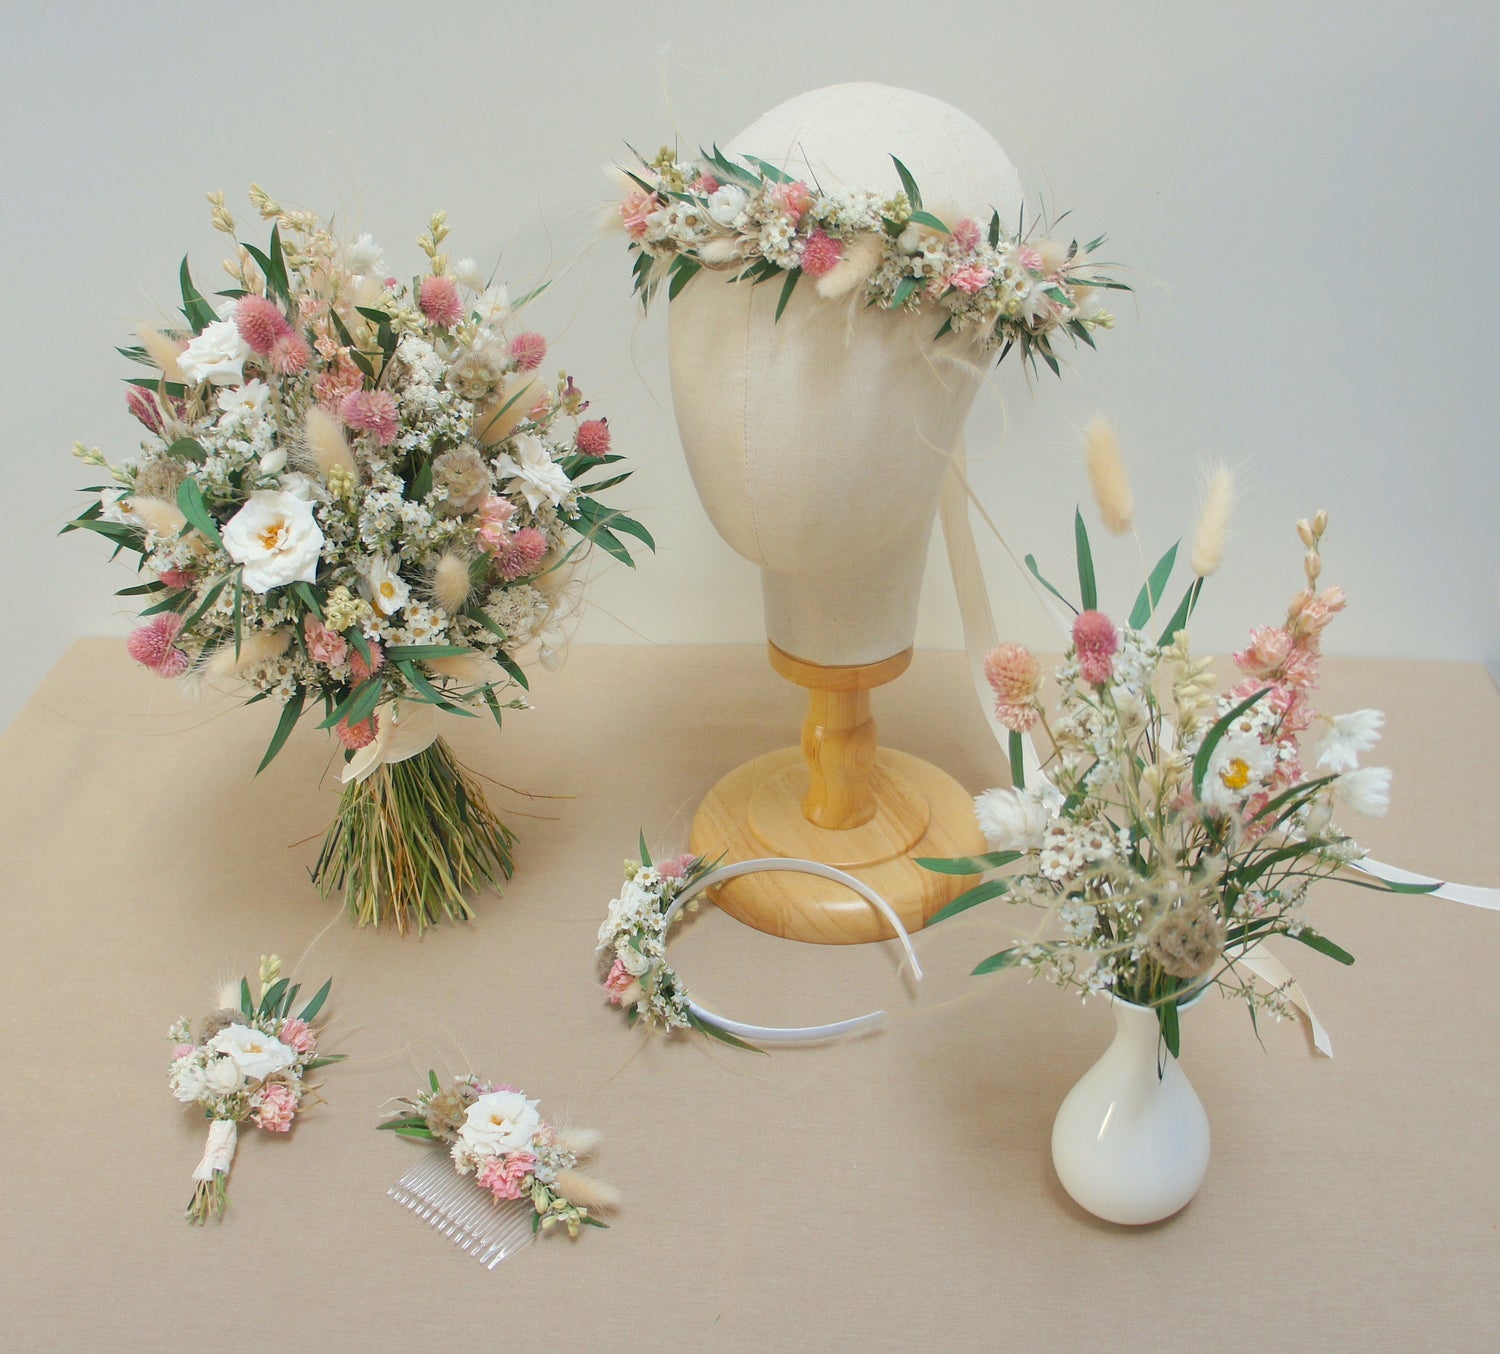 Serie FREUDENTAG, Trockenblumen / Dried flowers, Stabilisierte Rosen / Infinity roses, Hochzeit / Wedding